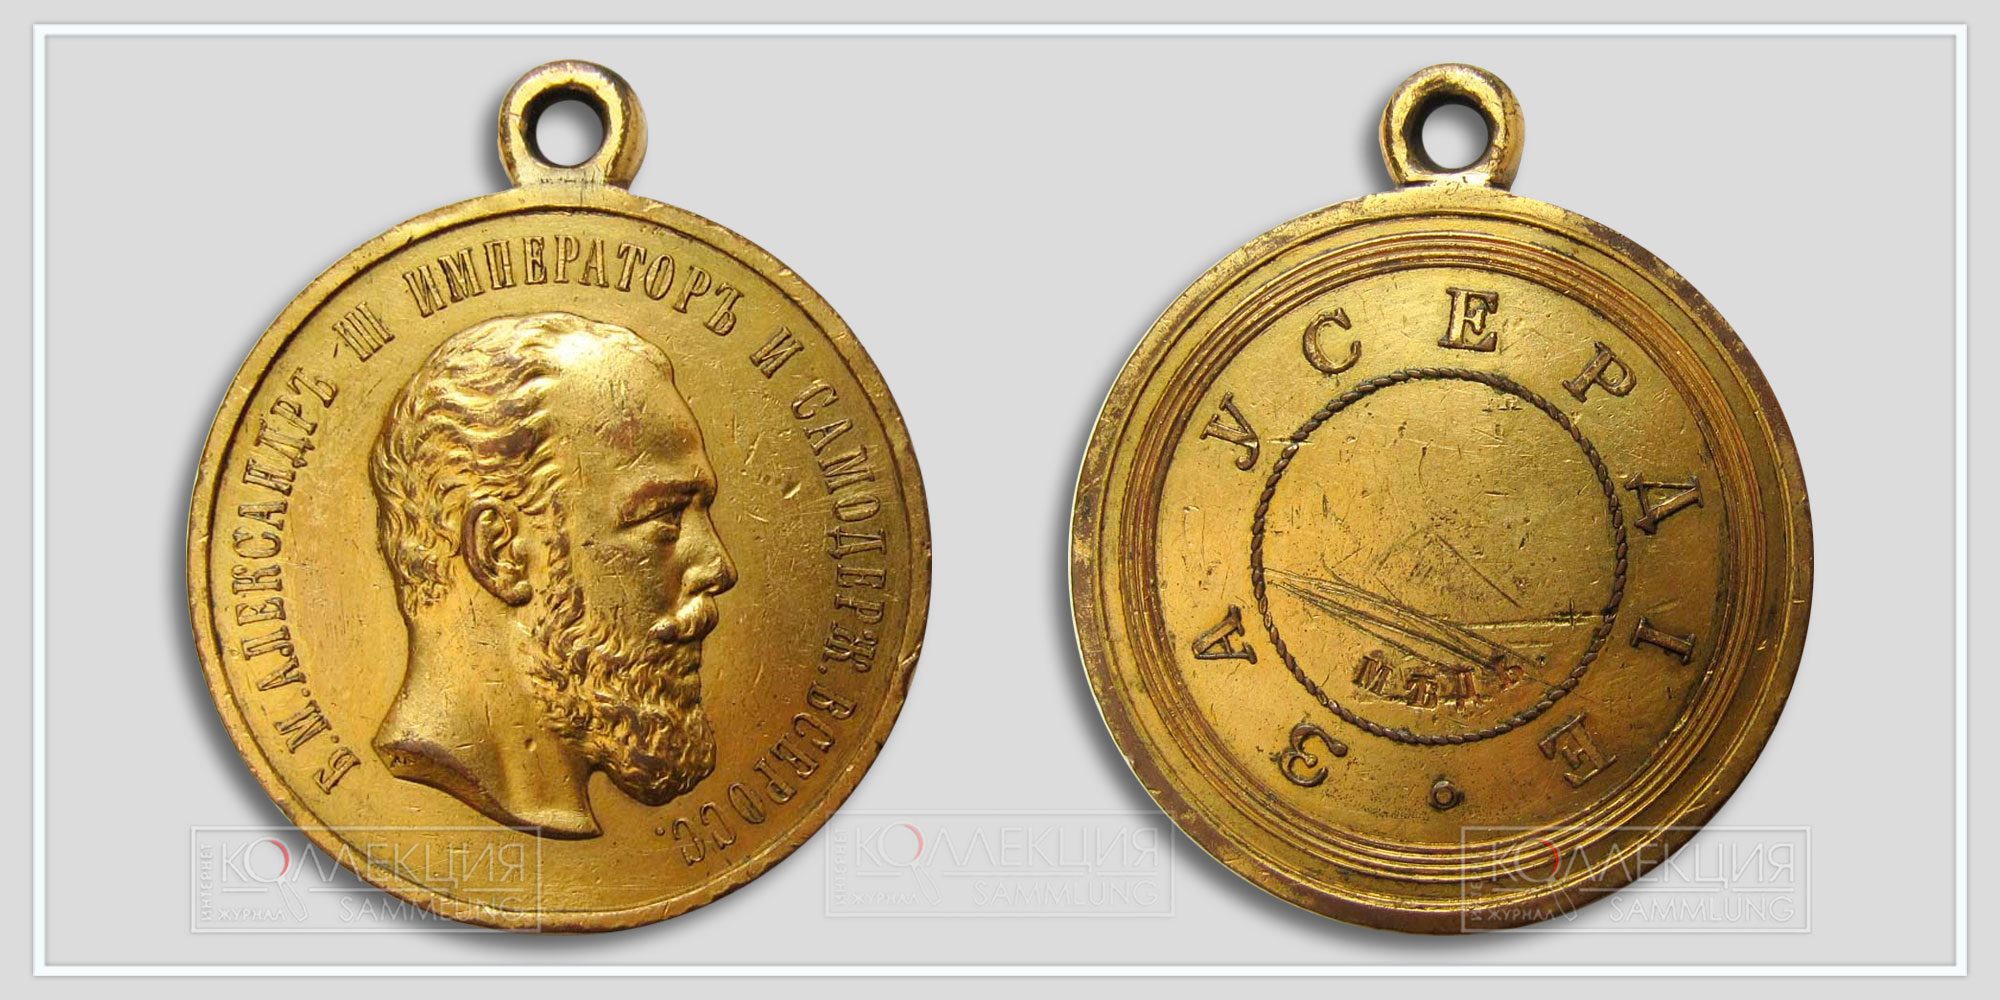 Медаль "За усердие" Александр III. Из архива Фалеристика.инфо. Разместил коллега Сибирякъ